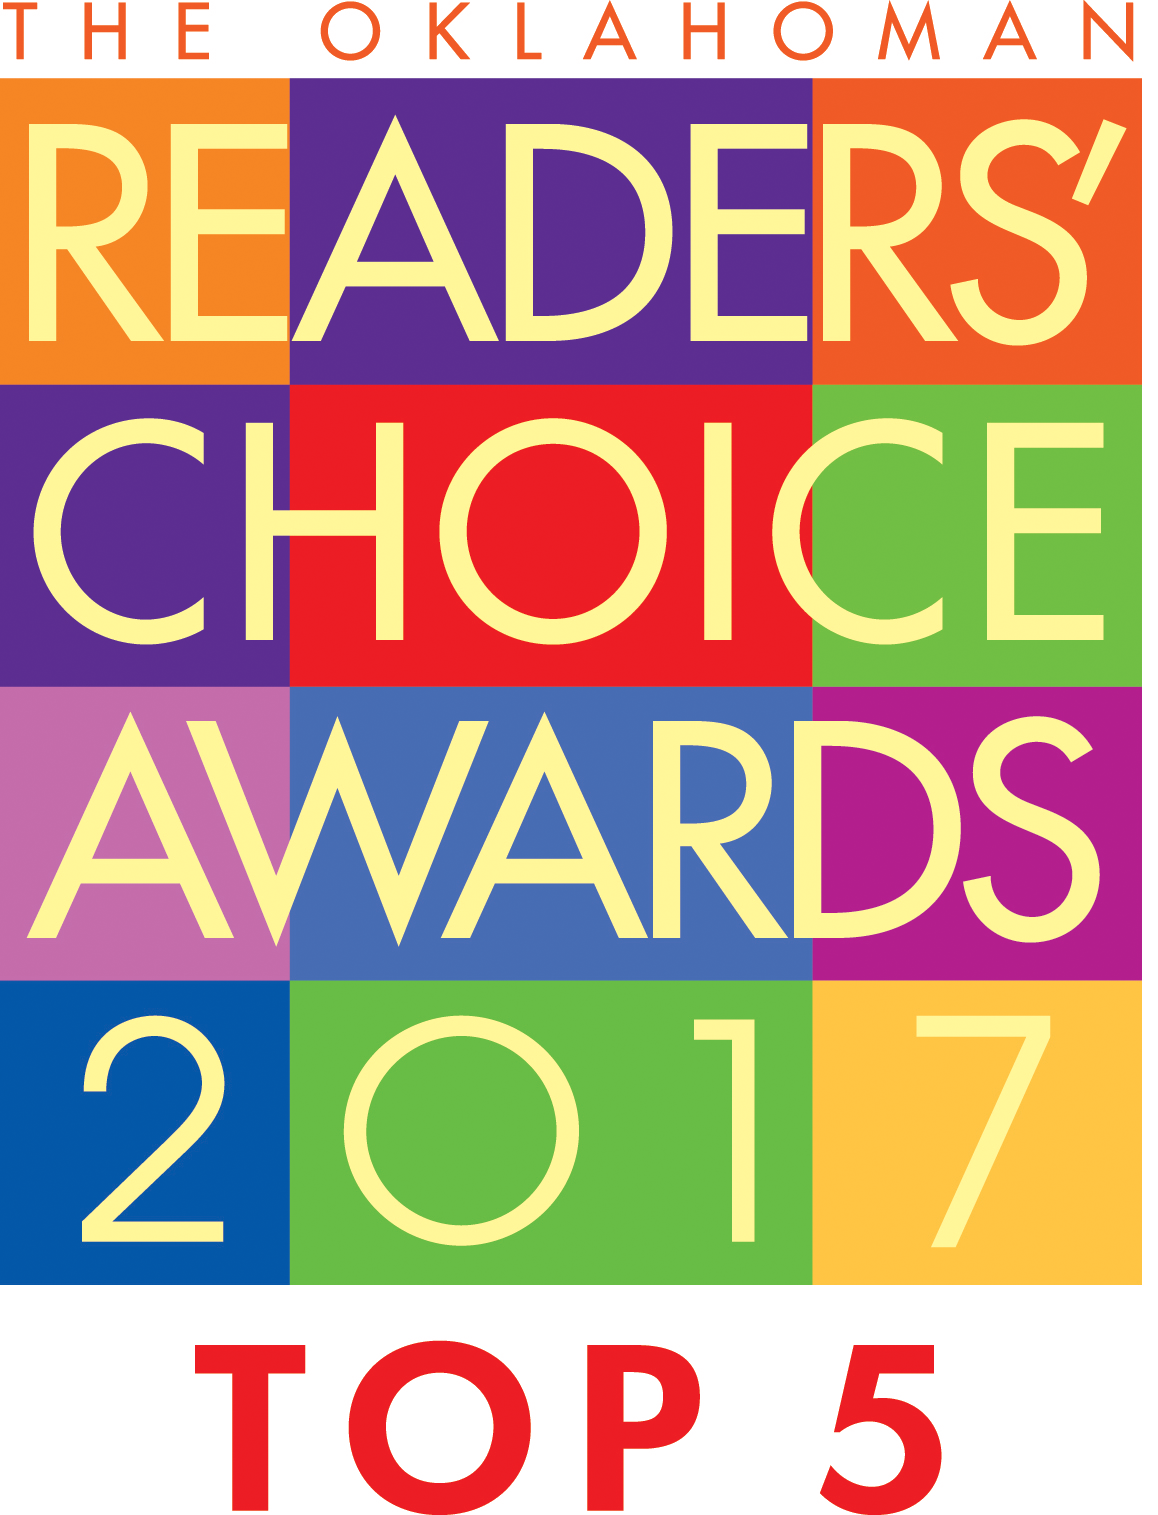 READERS_CHOICE_TOP5_2017 logo.png